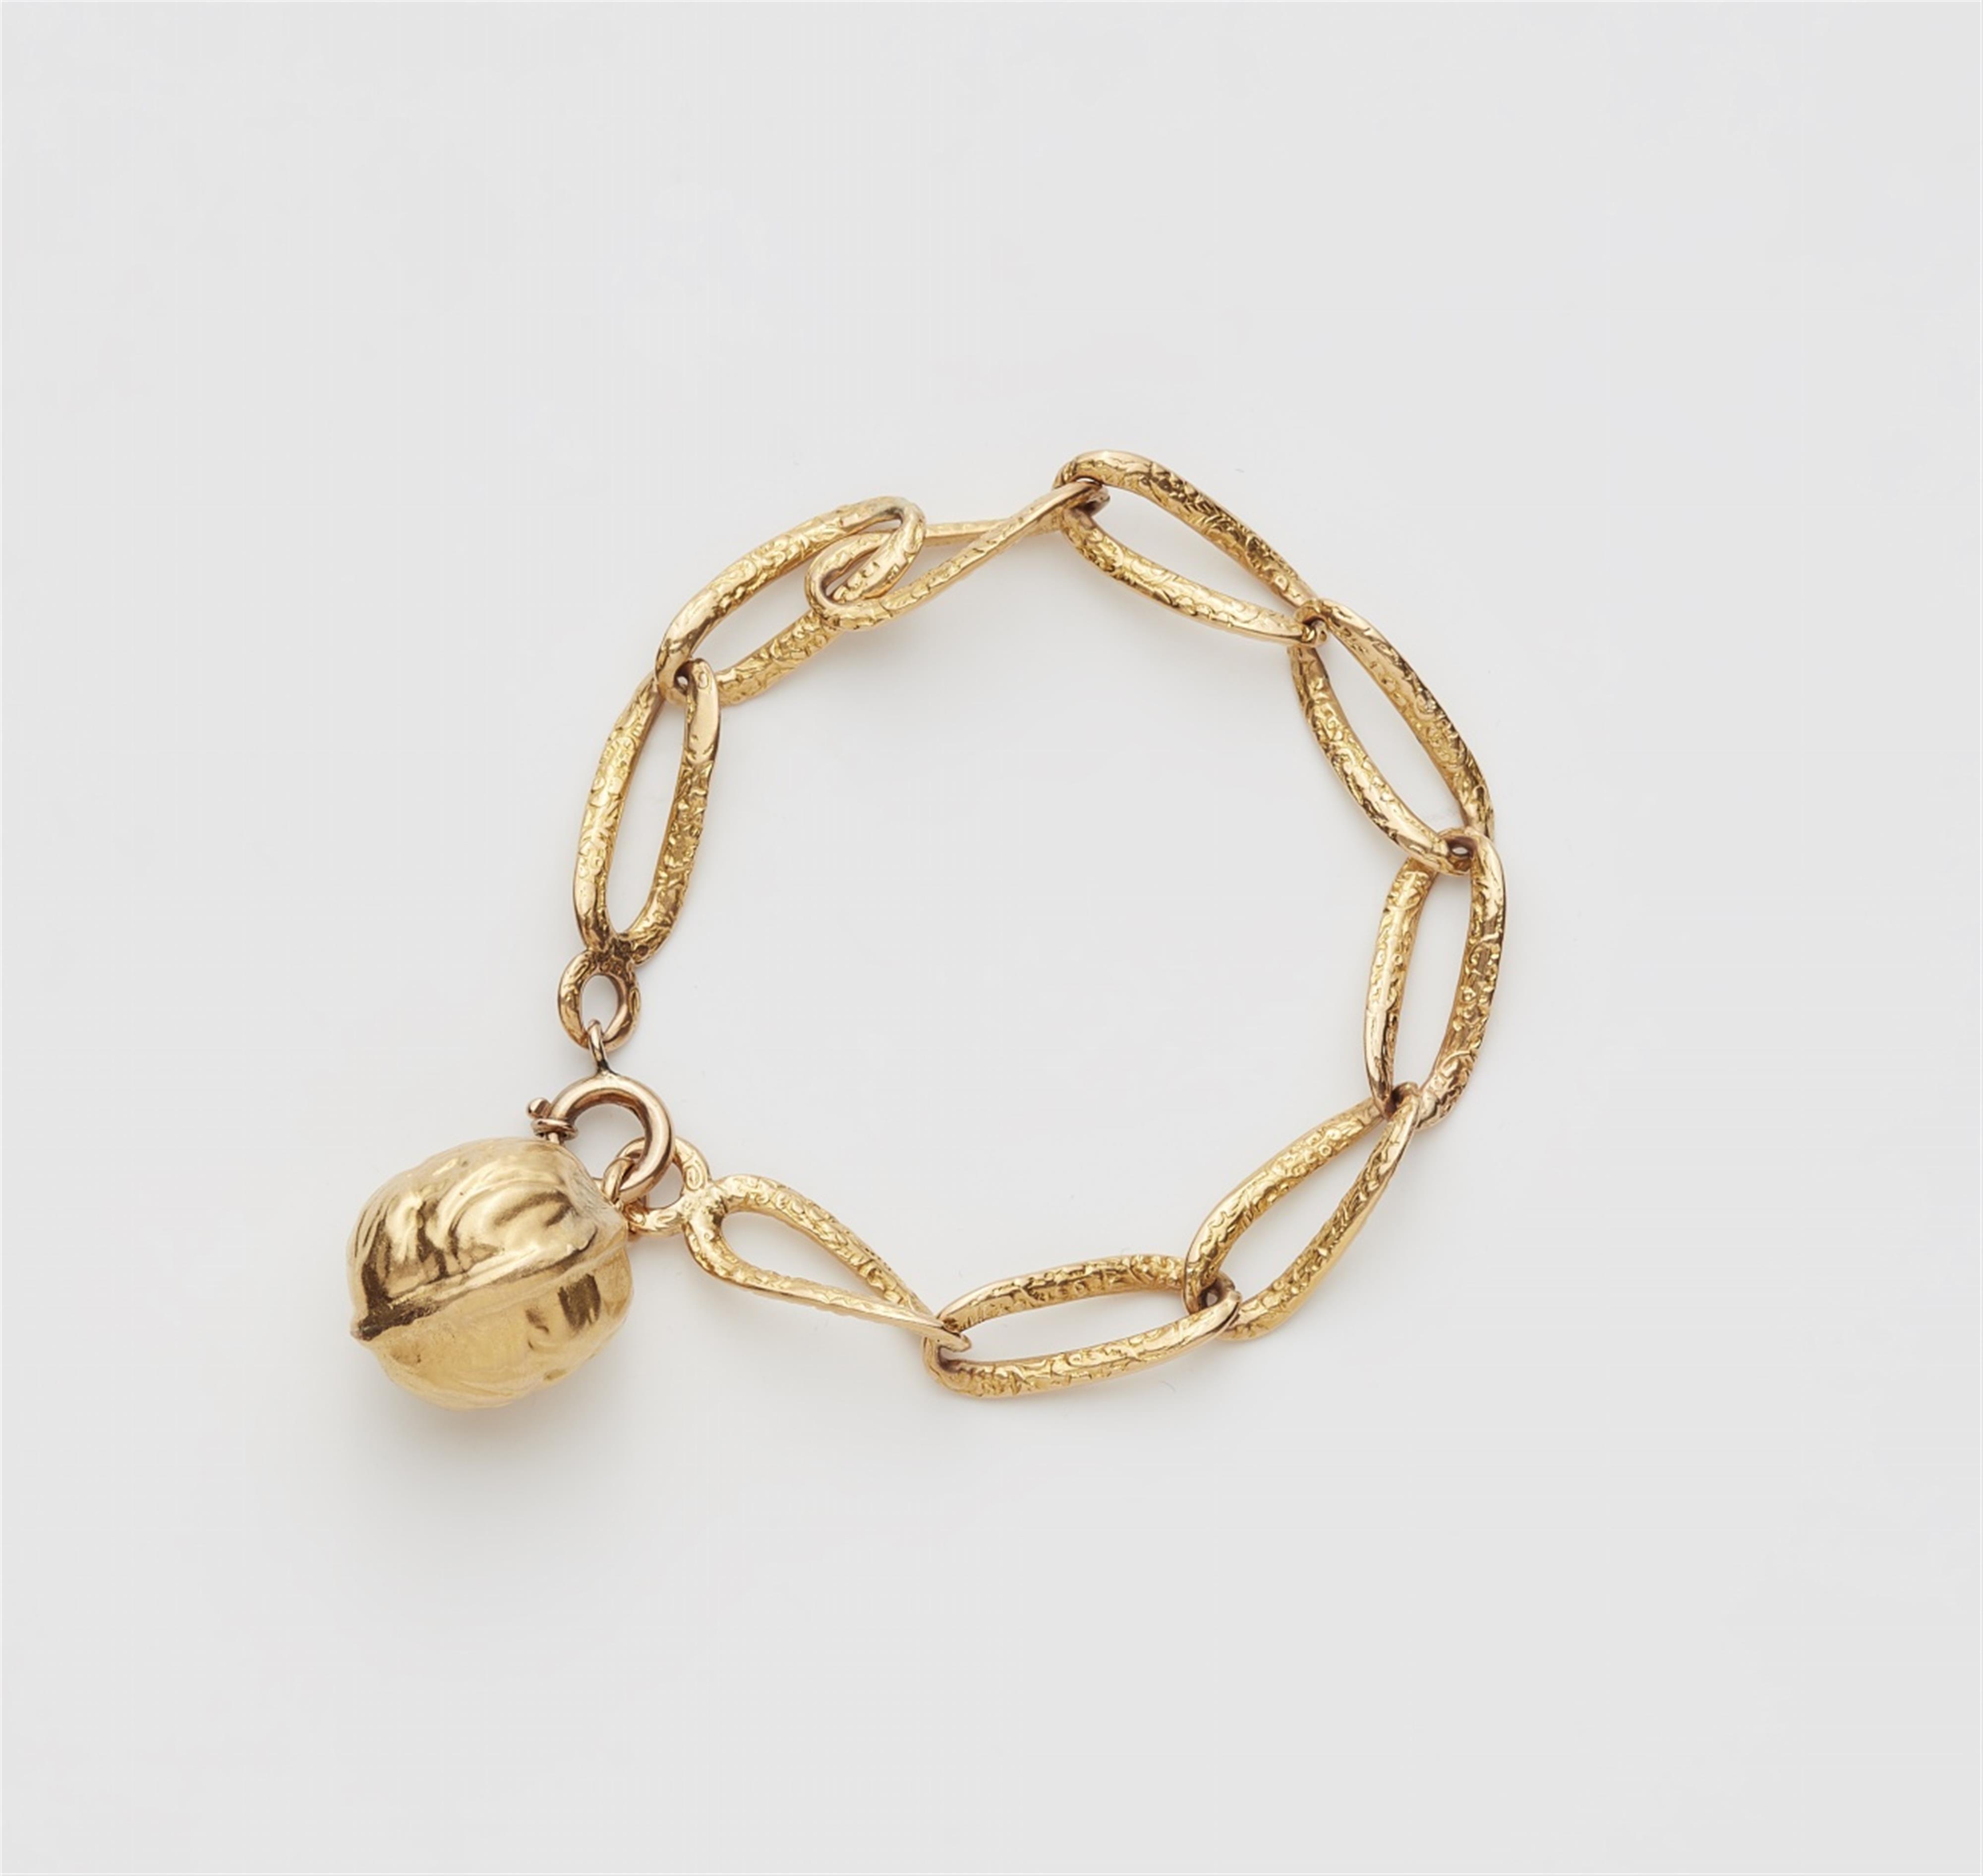 An 18k gold bracelet with a walnut charm - image-1